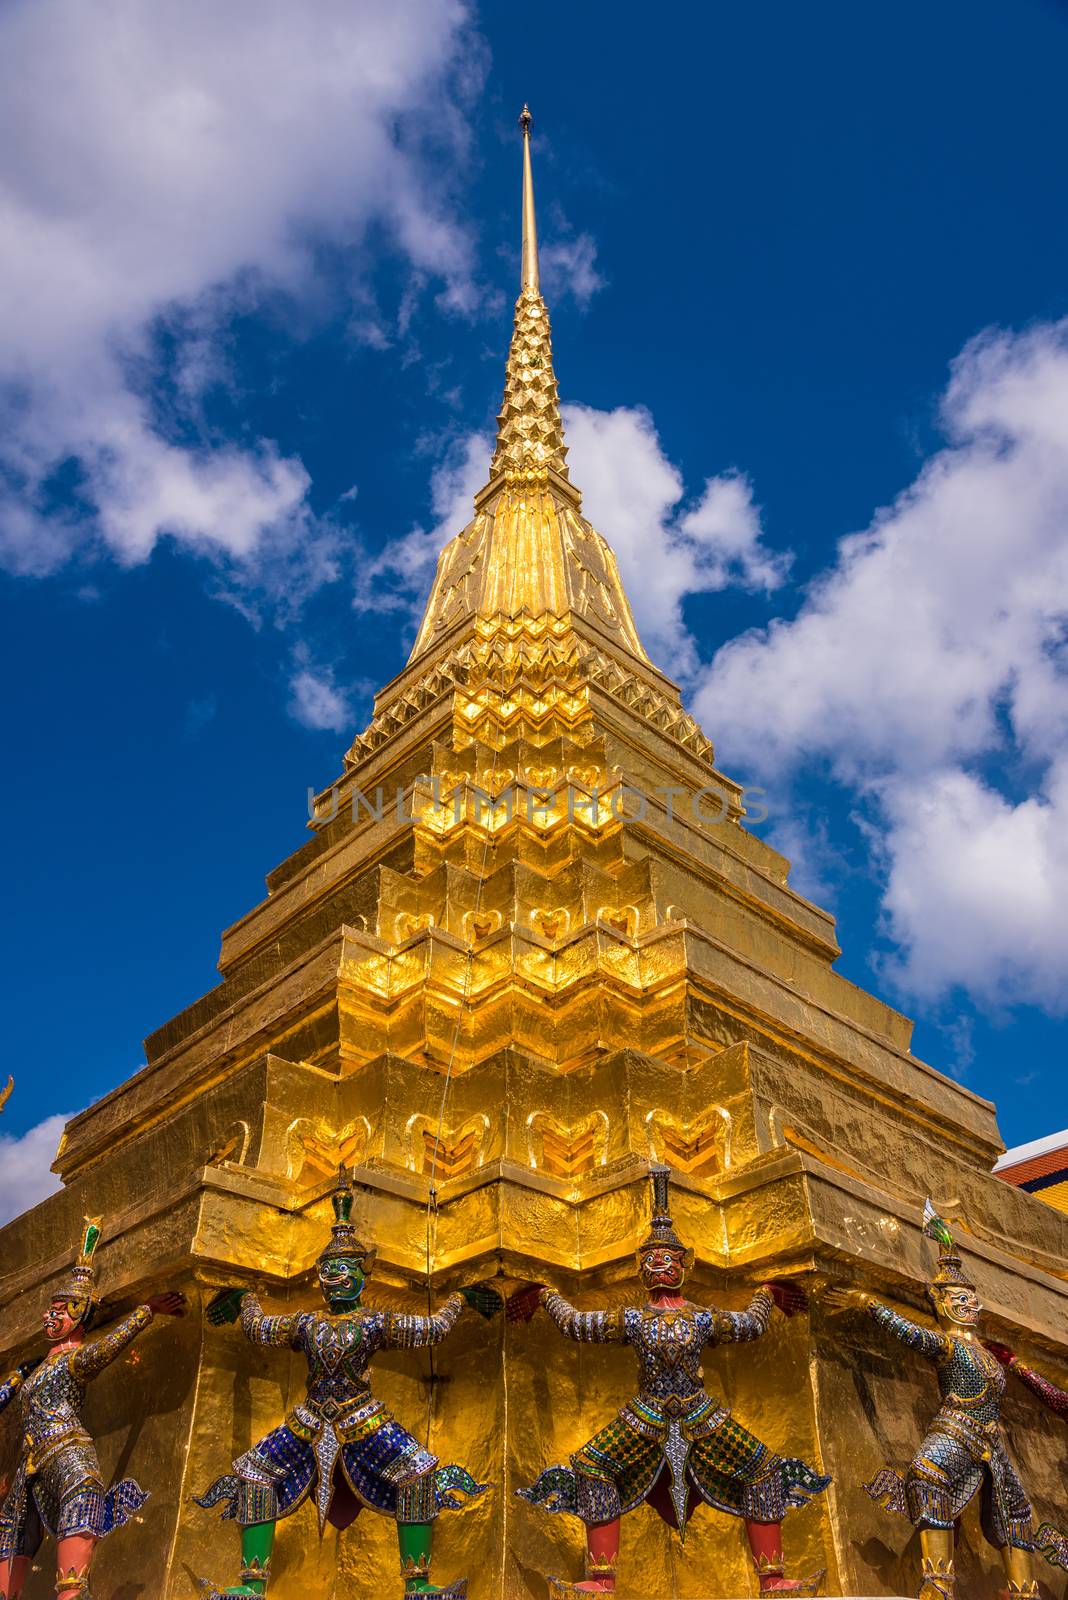 Demon warriors guarding the golden temple dome at Grand Palace of Bangkok.